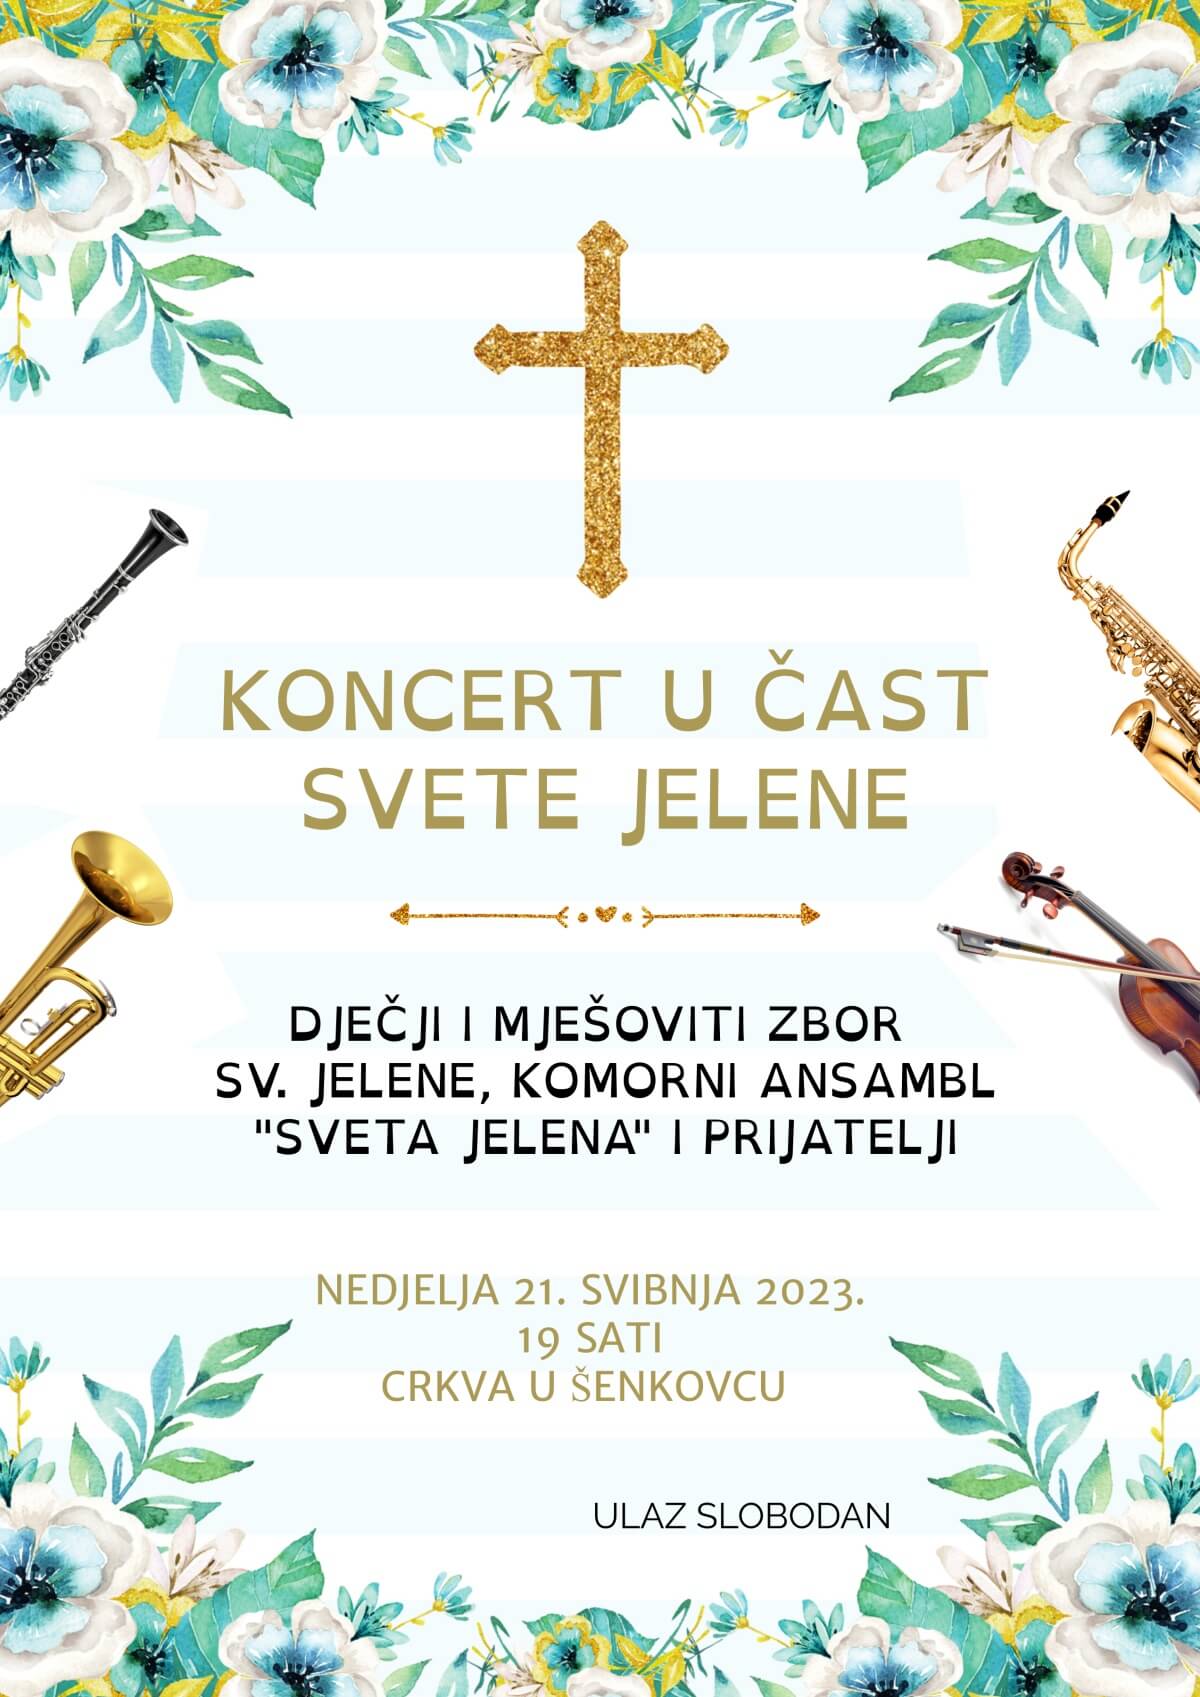 Plakat za koncert Sv. Jelene